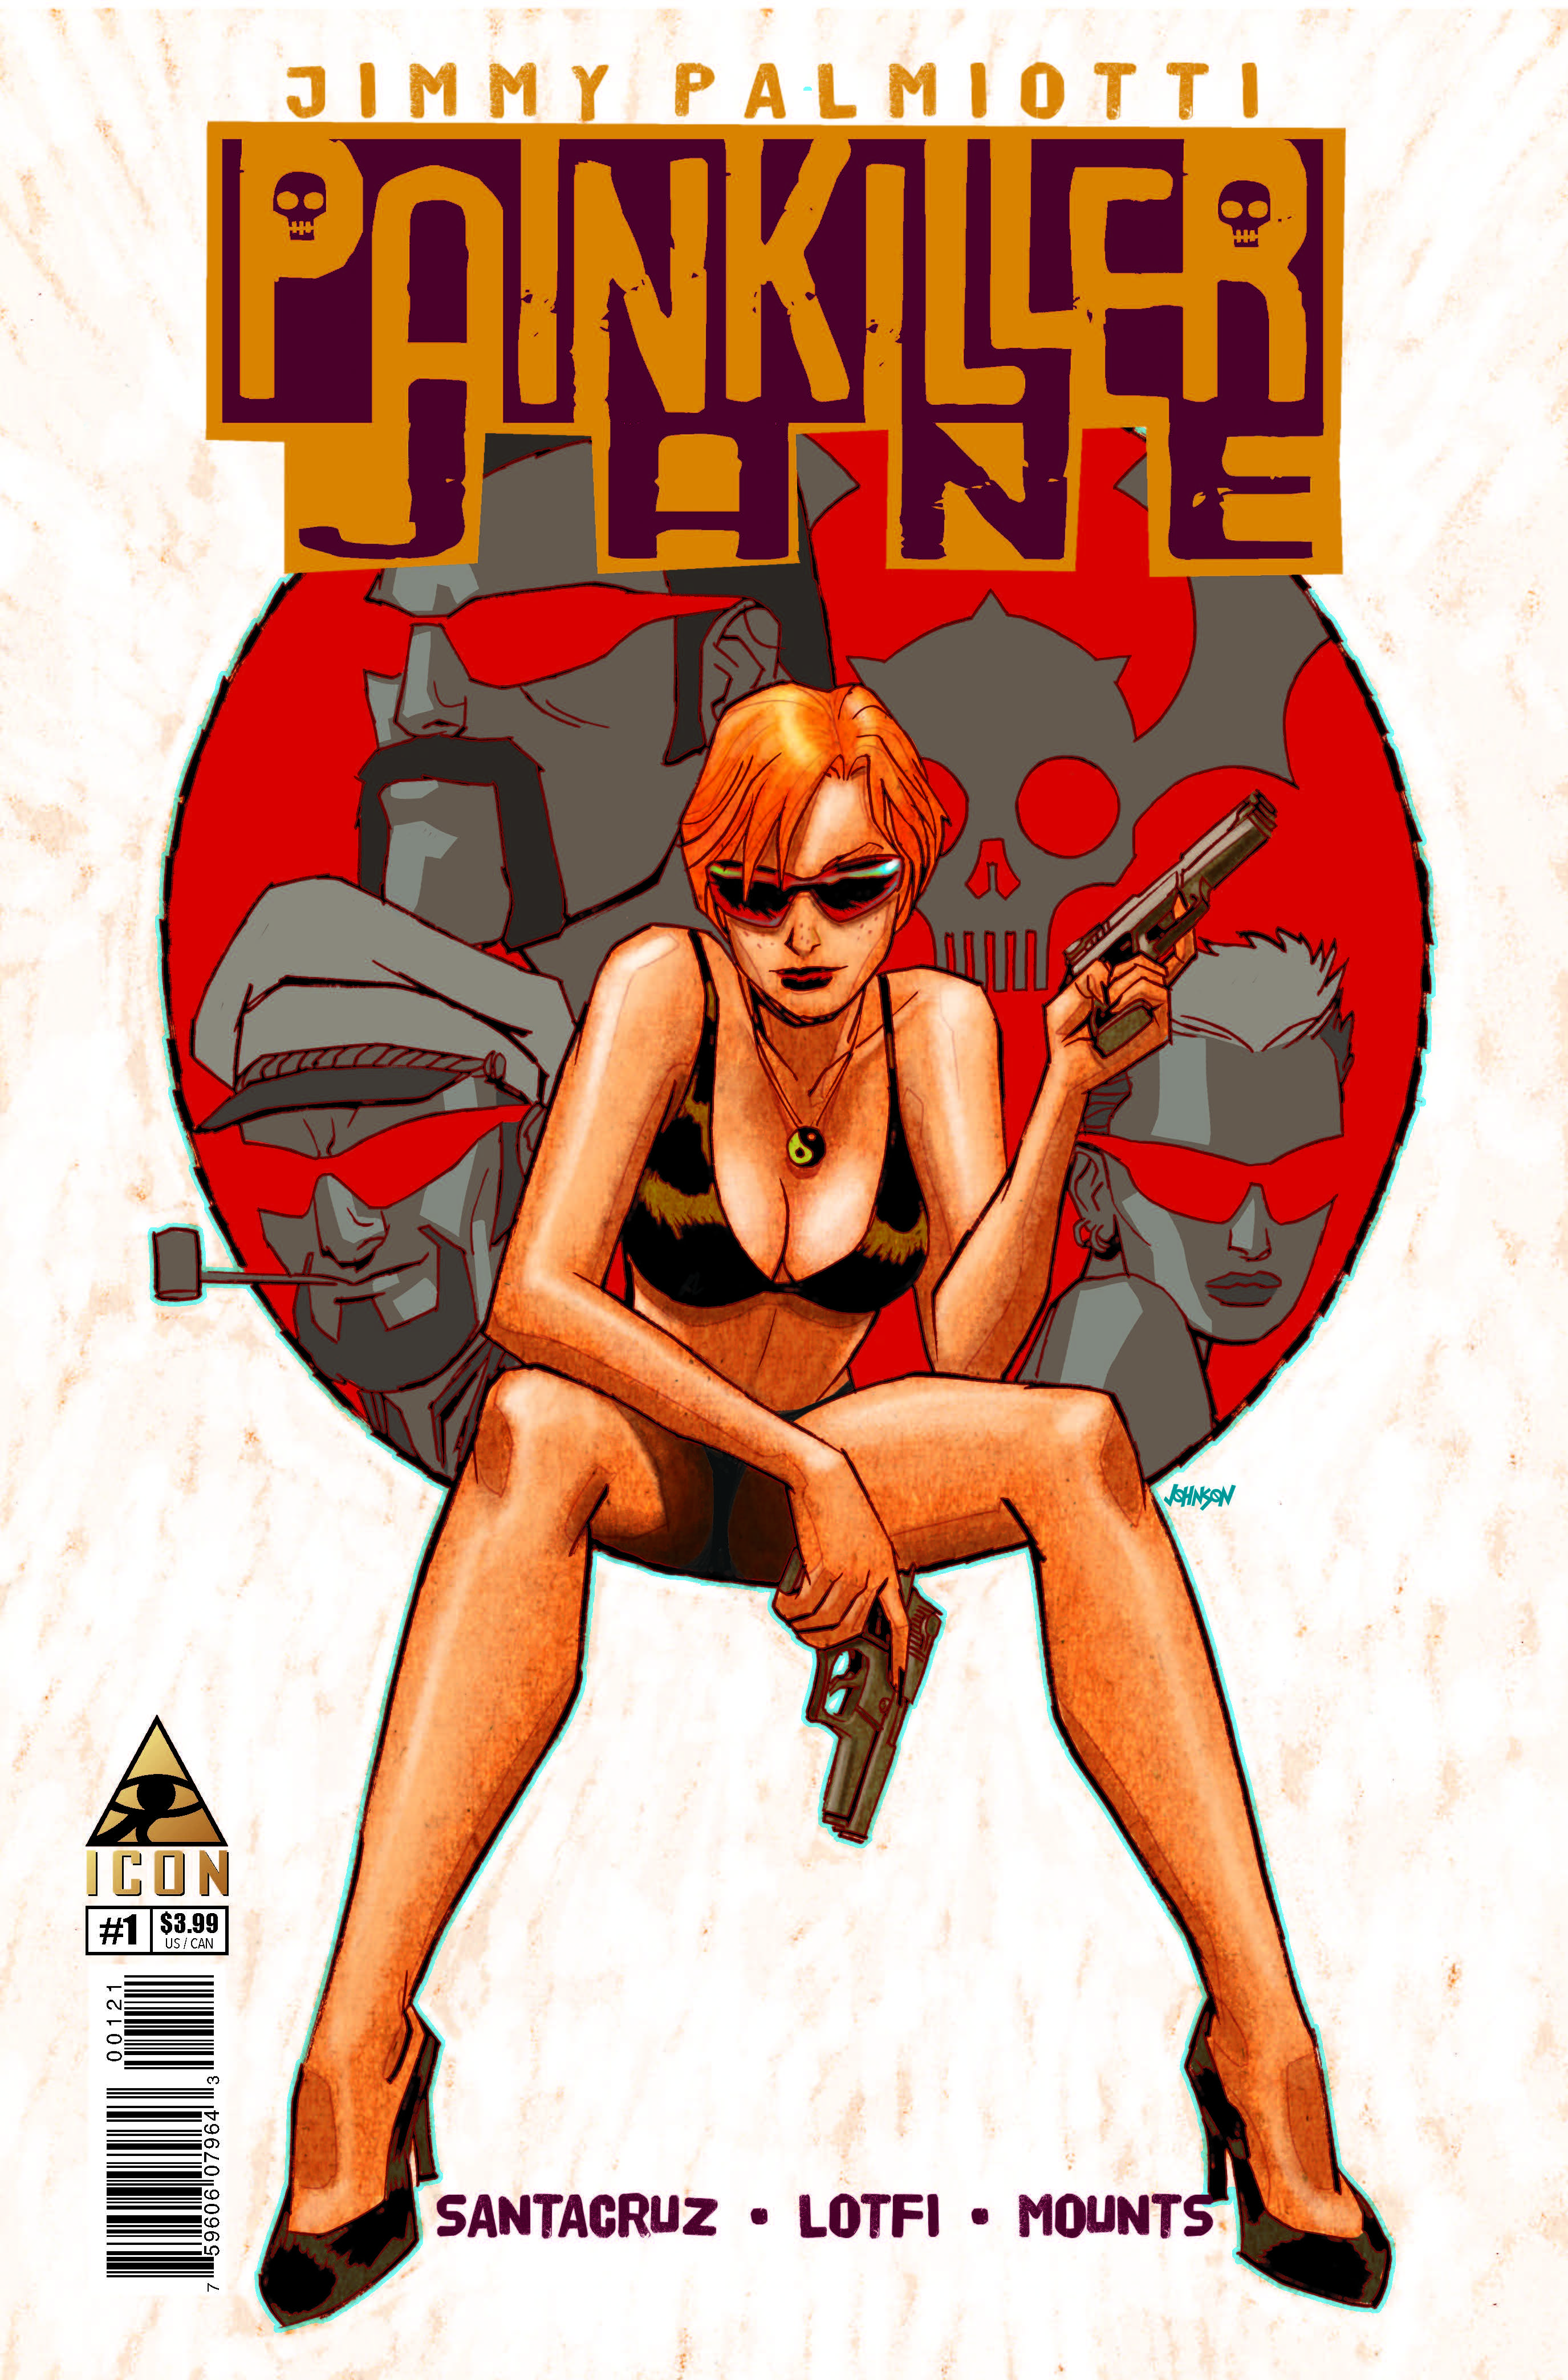 Painkiller Jane: The Price of Freedom (2013) #1 (Johnson Variant)